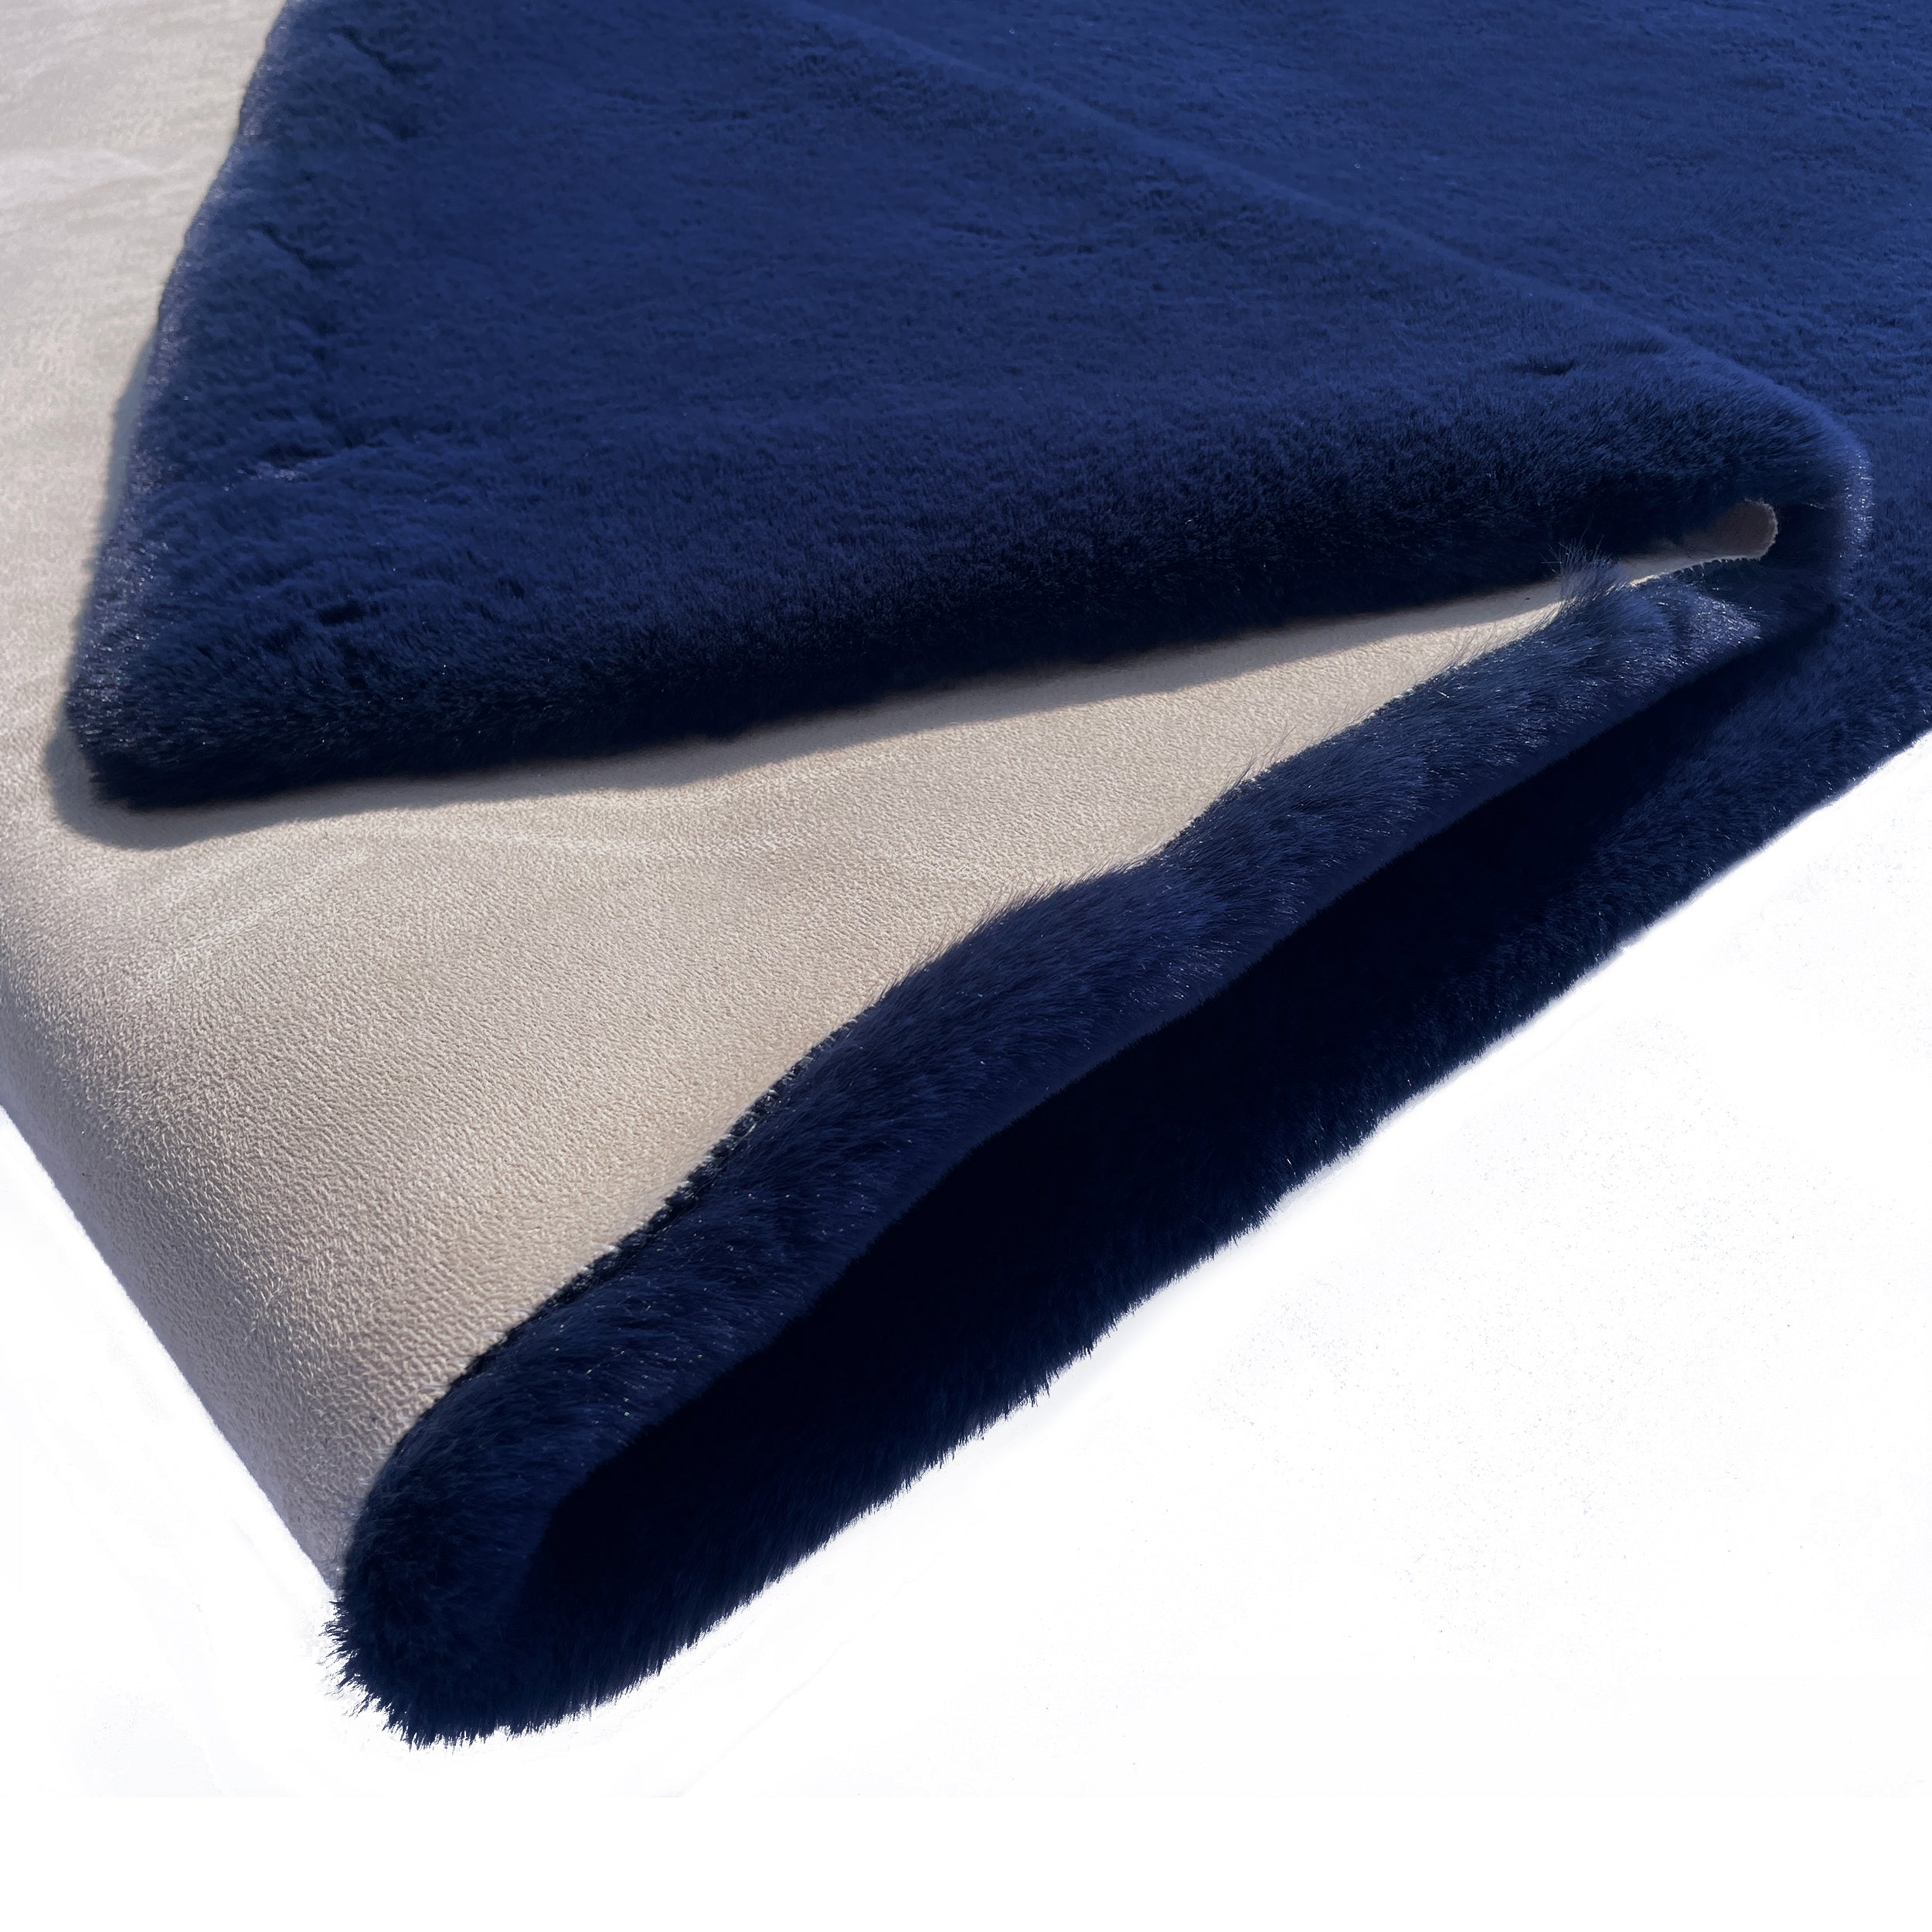 Luxury Chinchilla Navy Blue Faux Fur Plush Area Rug